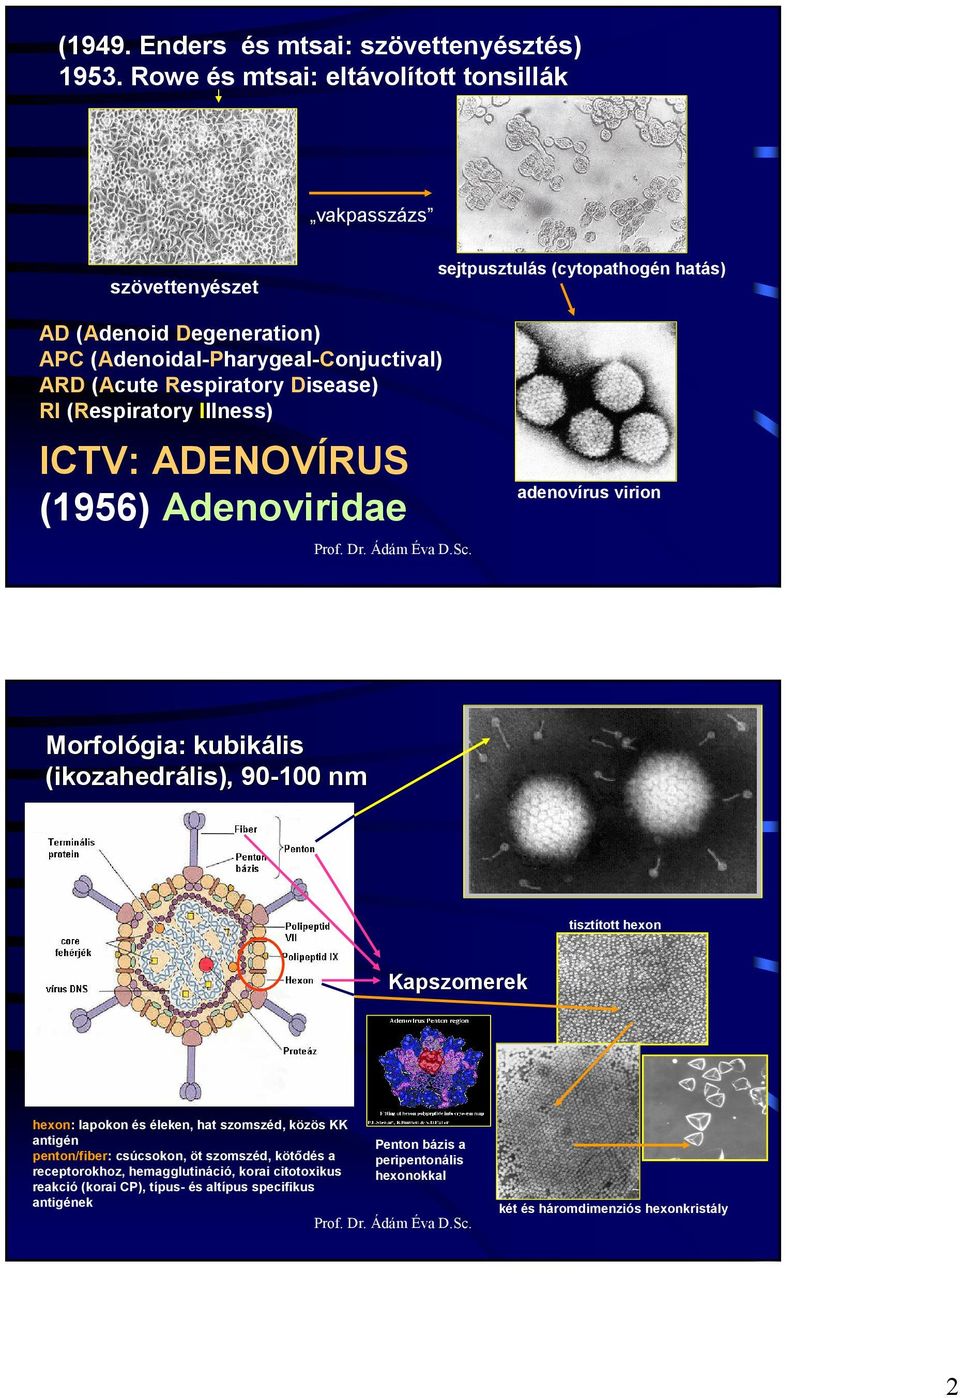 (Acute Respiratory Disease) RI (Respiratory Illness) ICTV: ADENOVÍRUS (1956) Adenoviridae adenovírus virion Morfológia: kubikális (ikozahedrális), 90-100 nm tisztított hexon